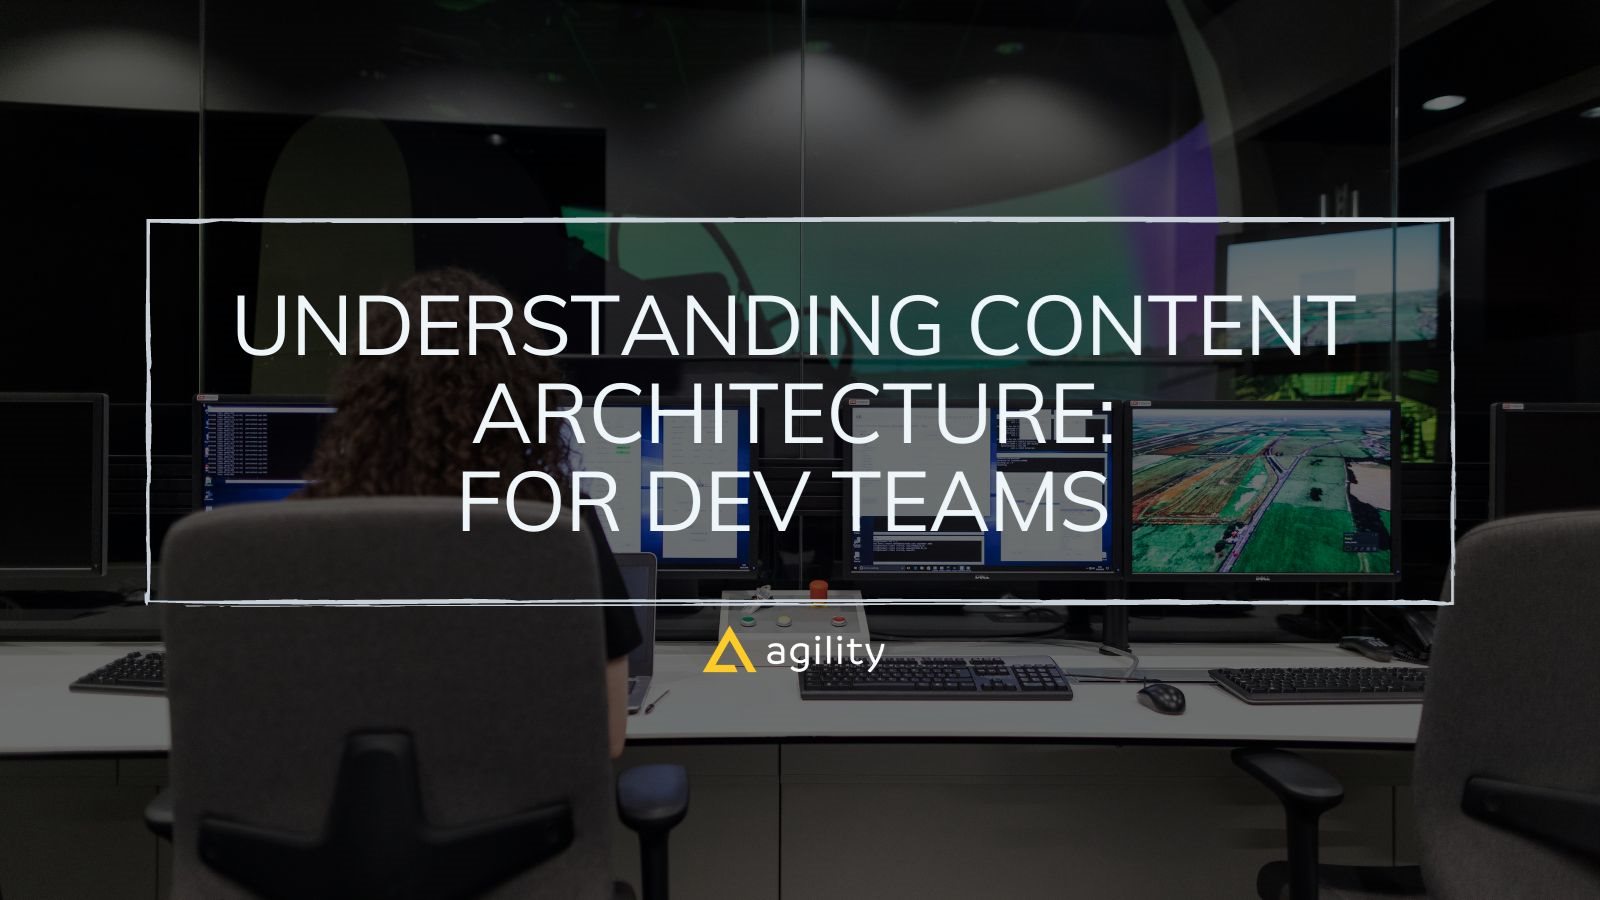 Content architecture for dev